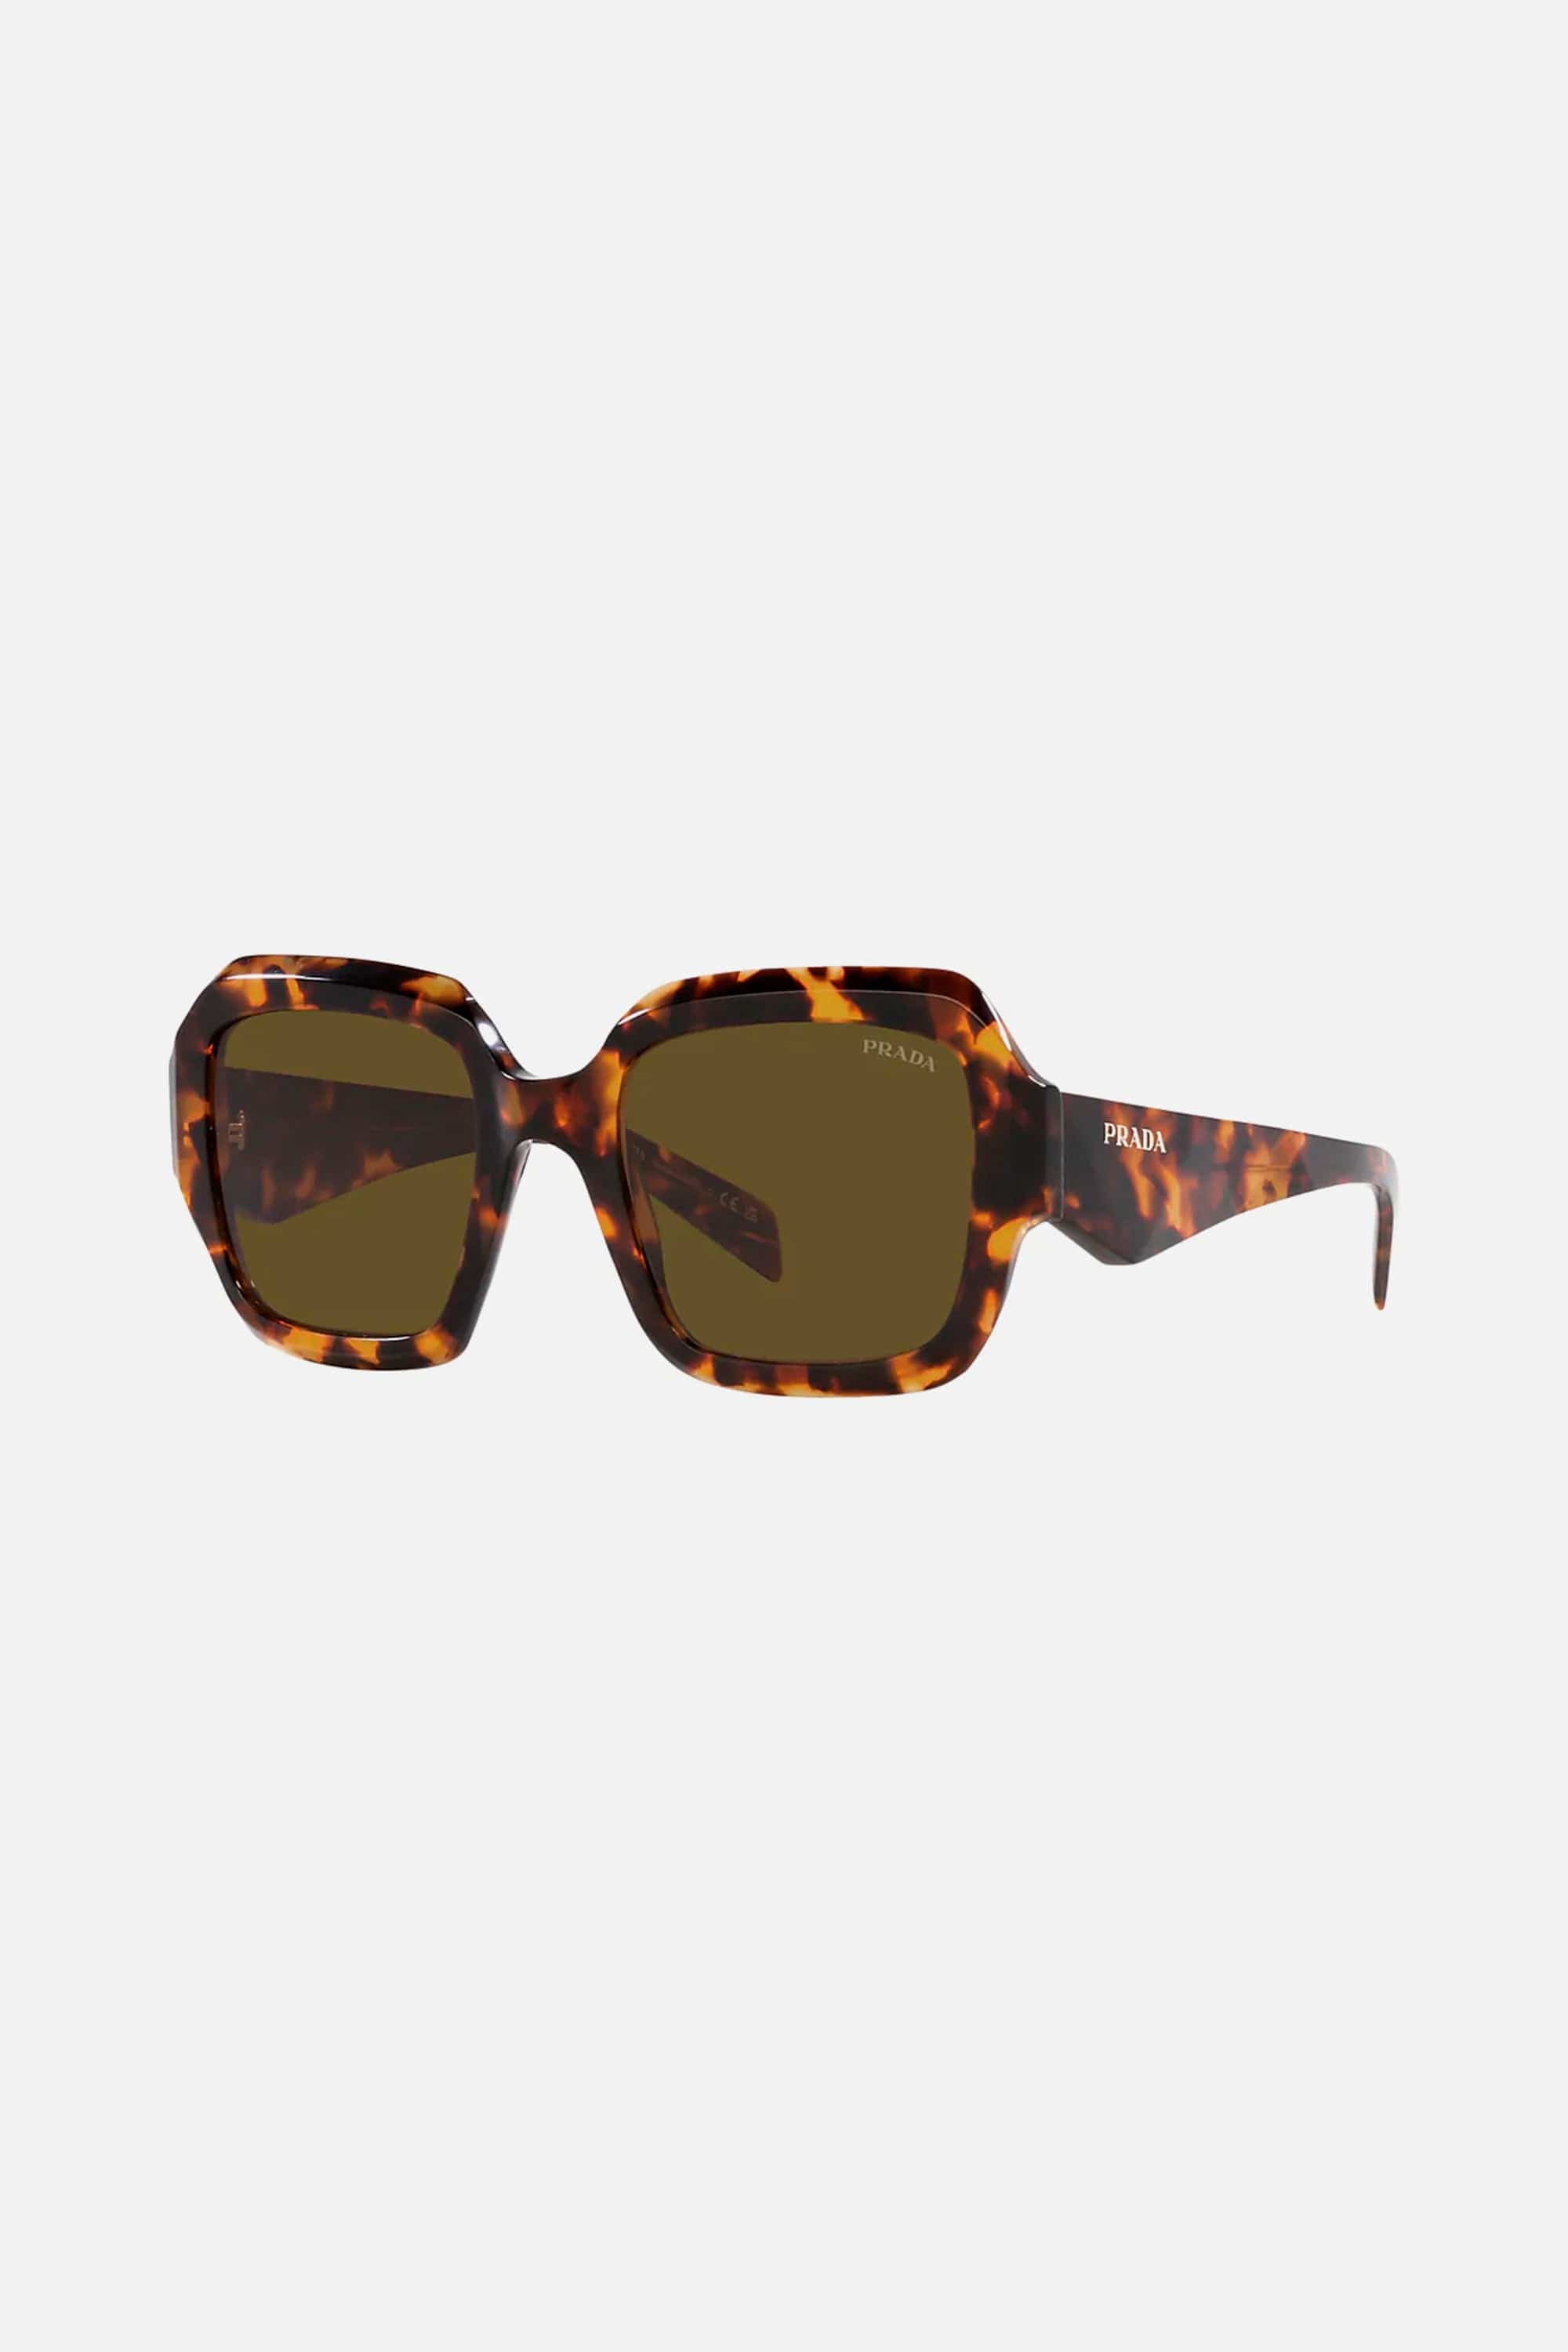 Prada PR28ZS havana butterfly sunglasses - Eyewear Club